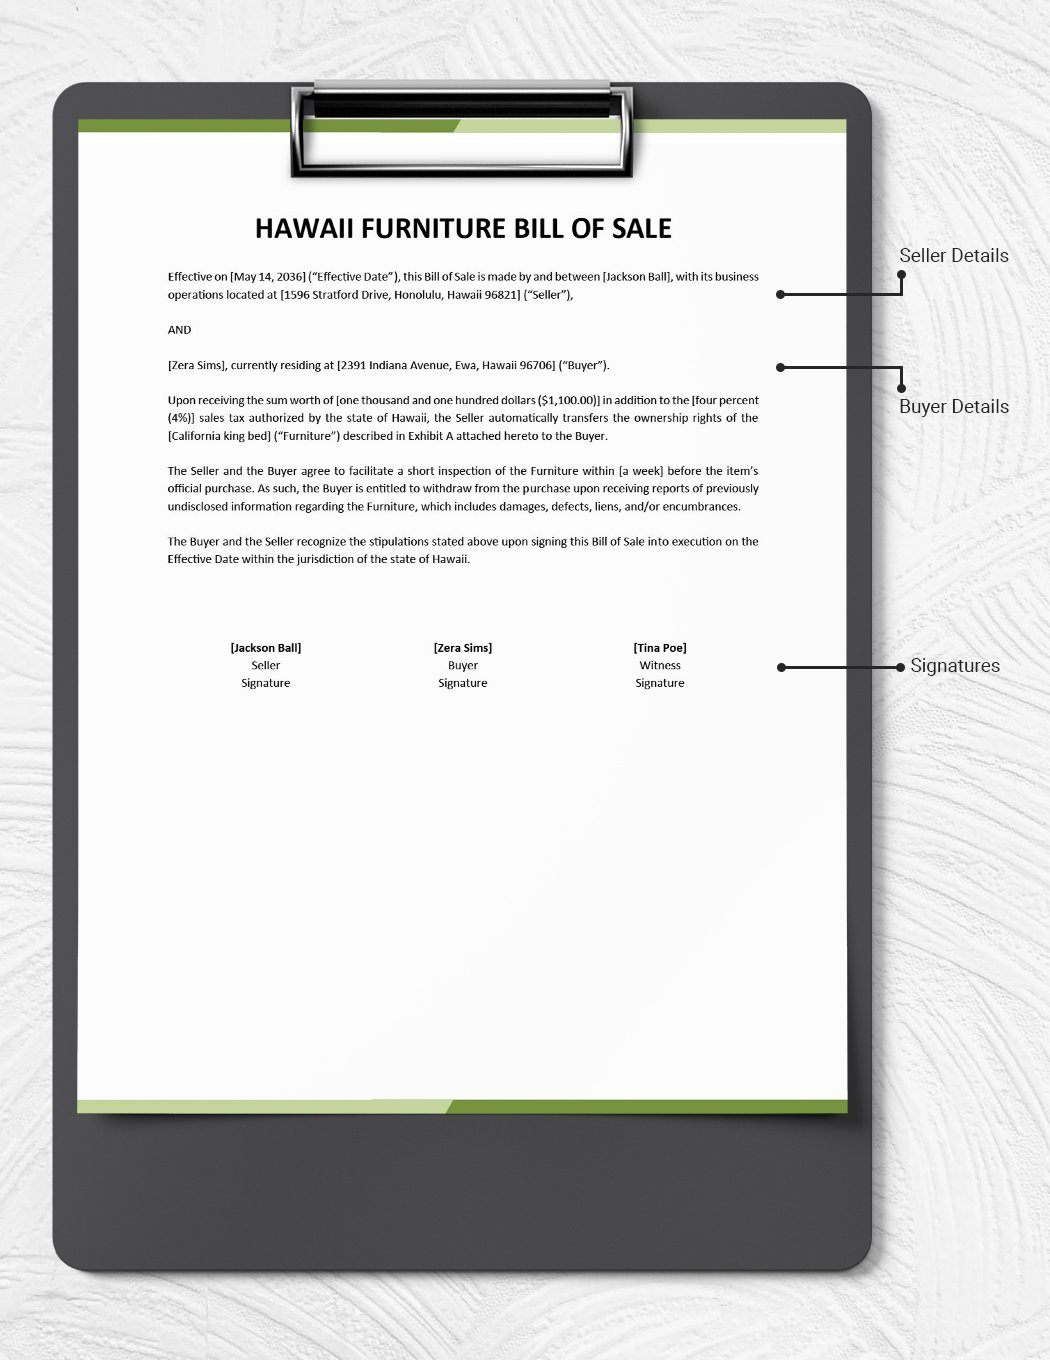 Hawaii Furniture Bill of Sale Form Template